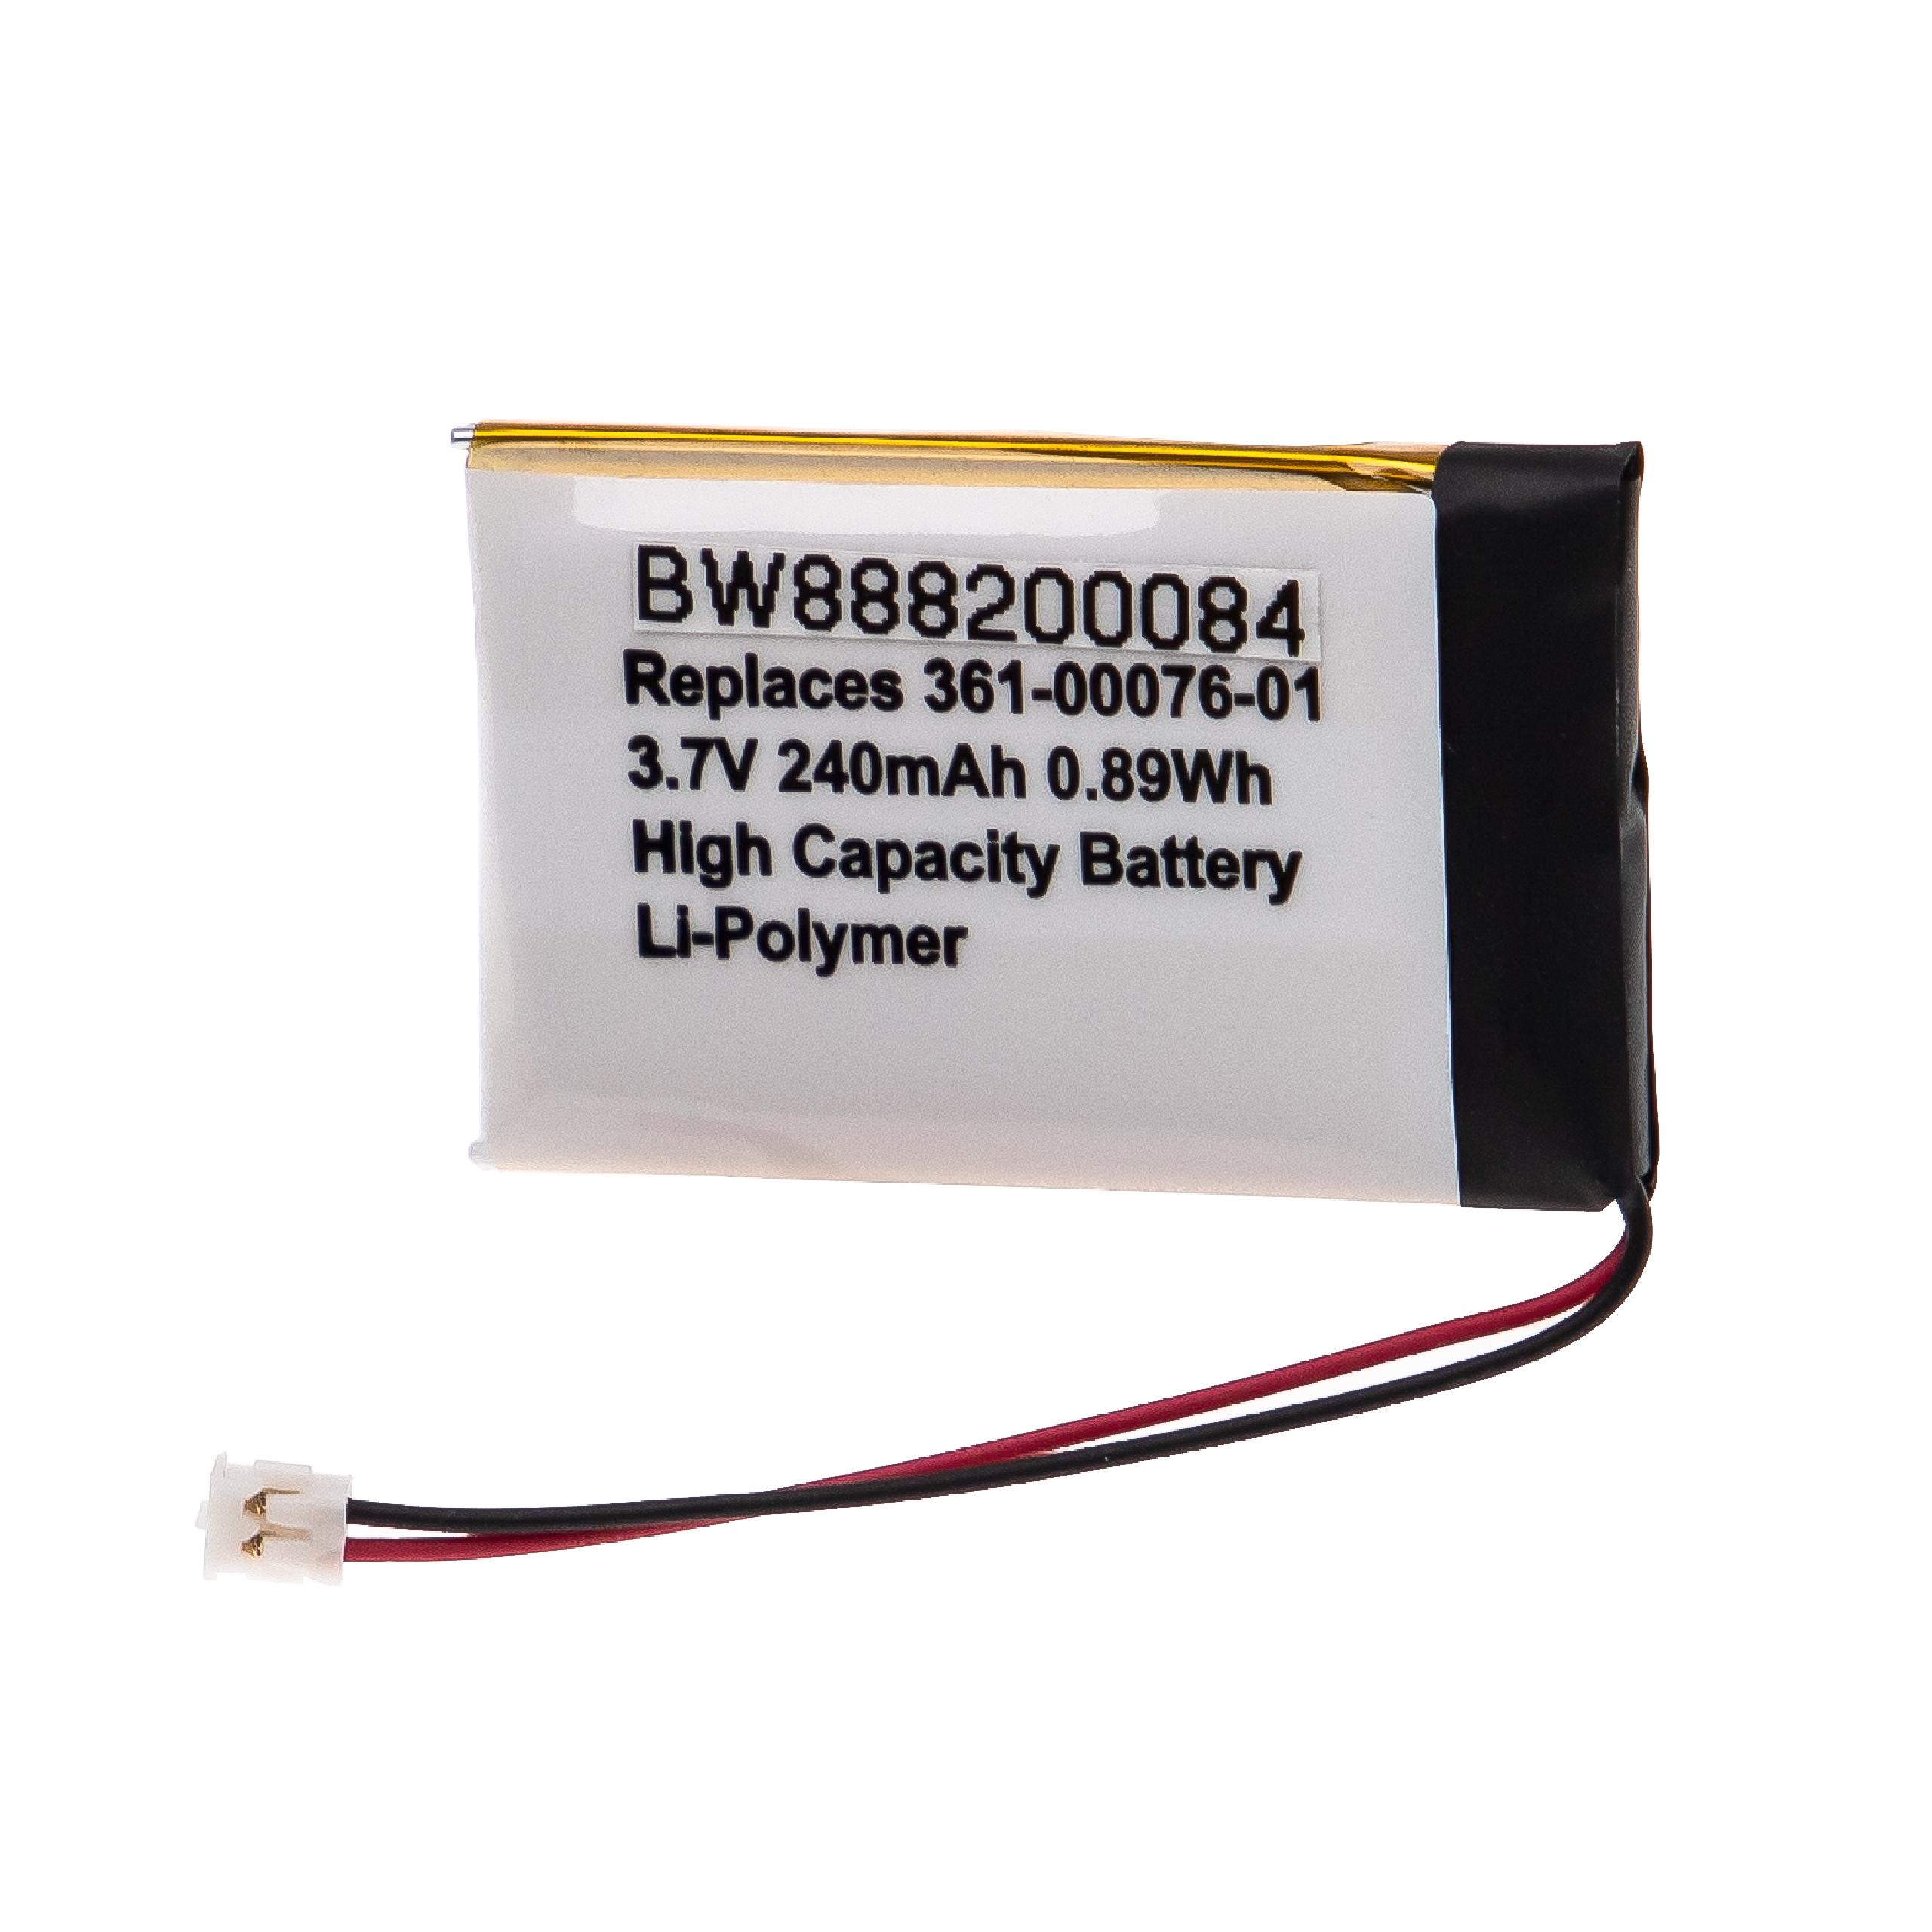 Smartwatch Battery Replacement for Garmin 361-00076-01 - 240mAh 3.7V Li-polymer